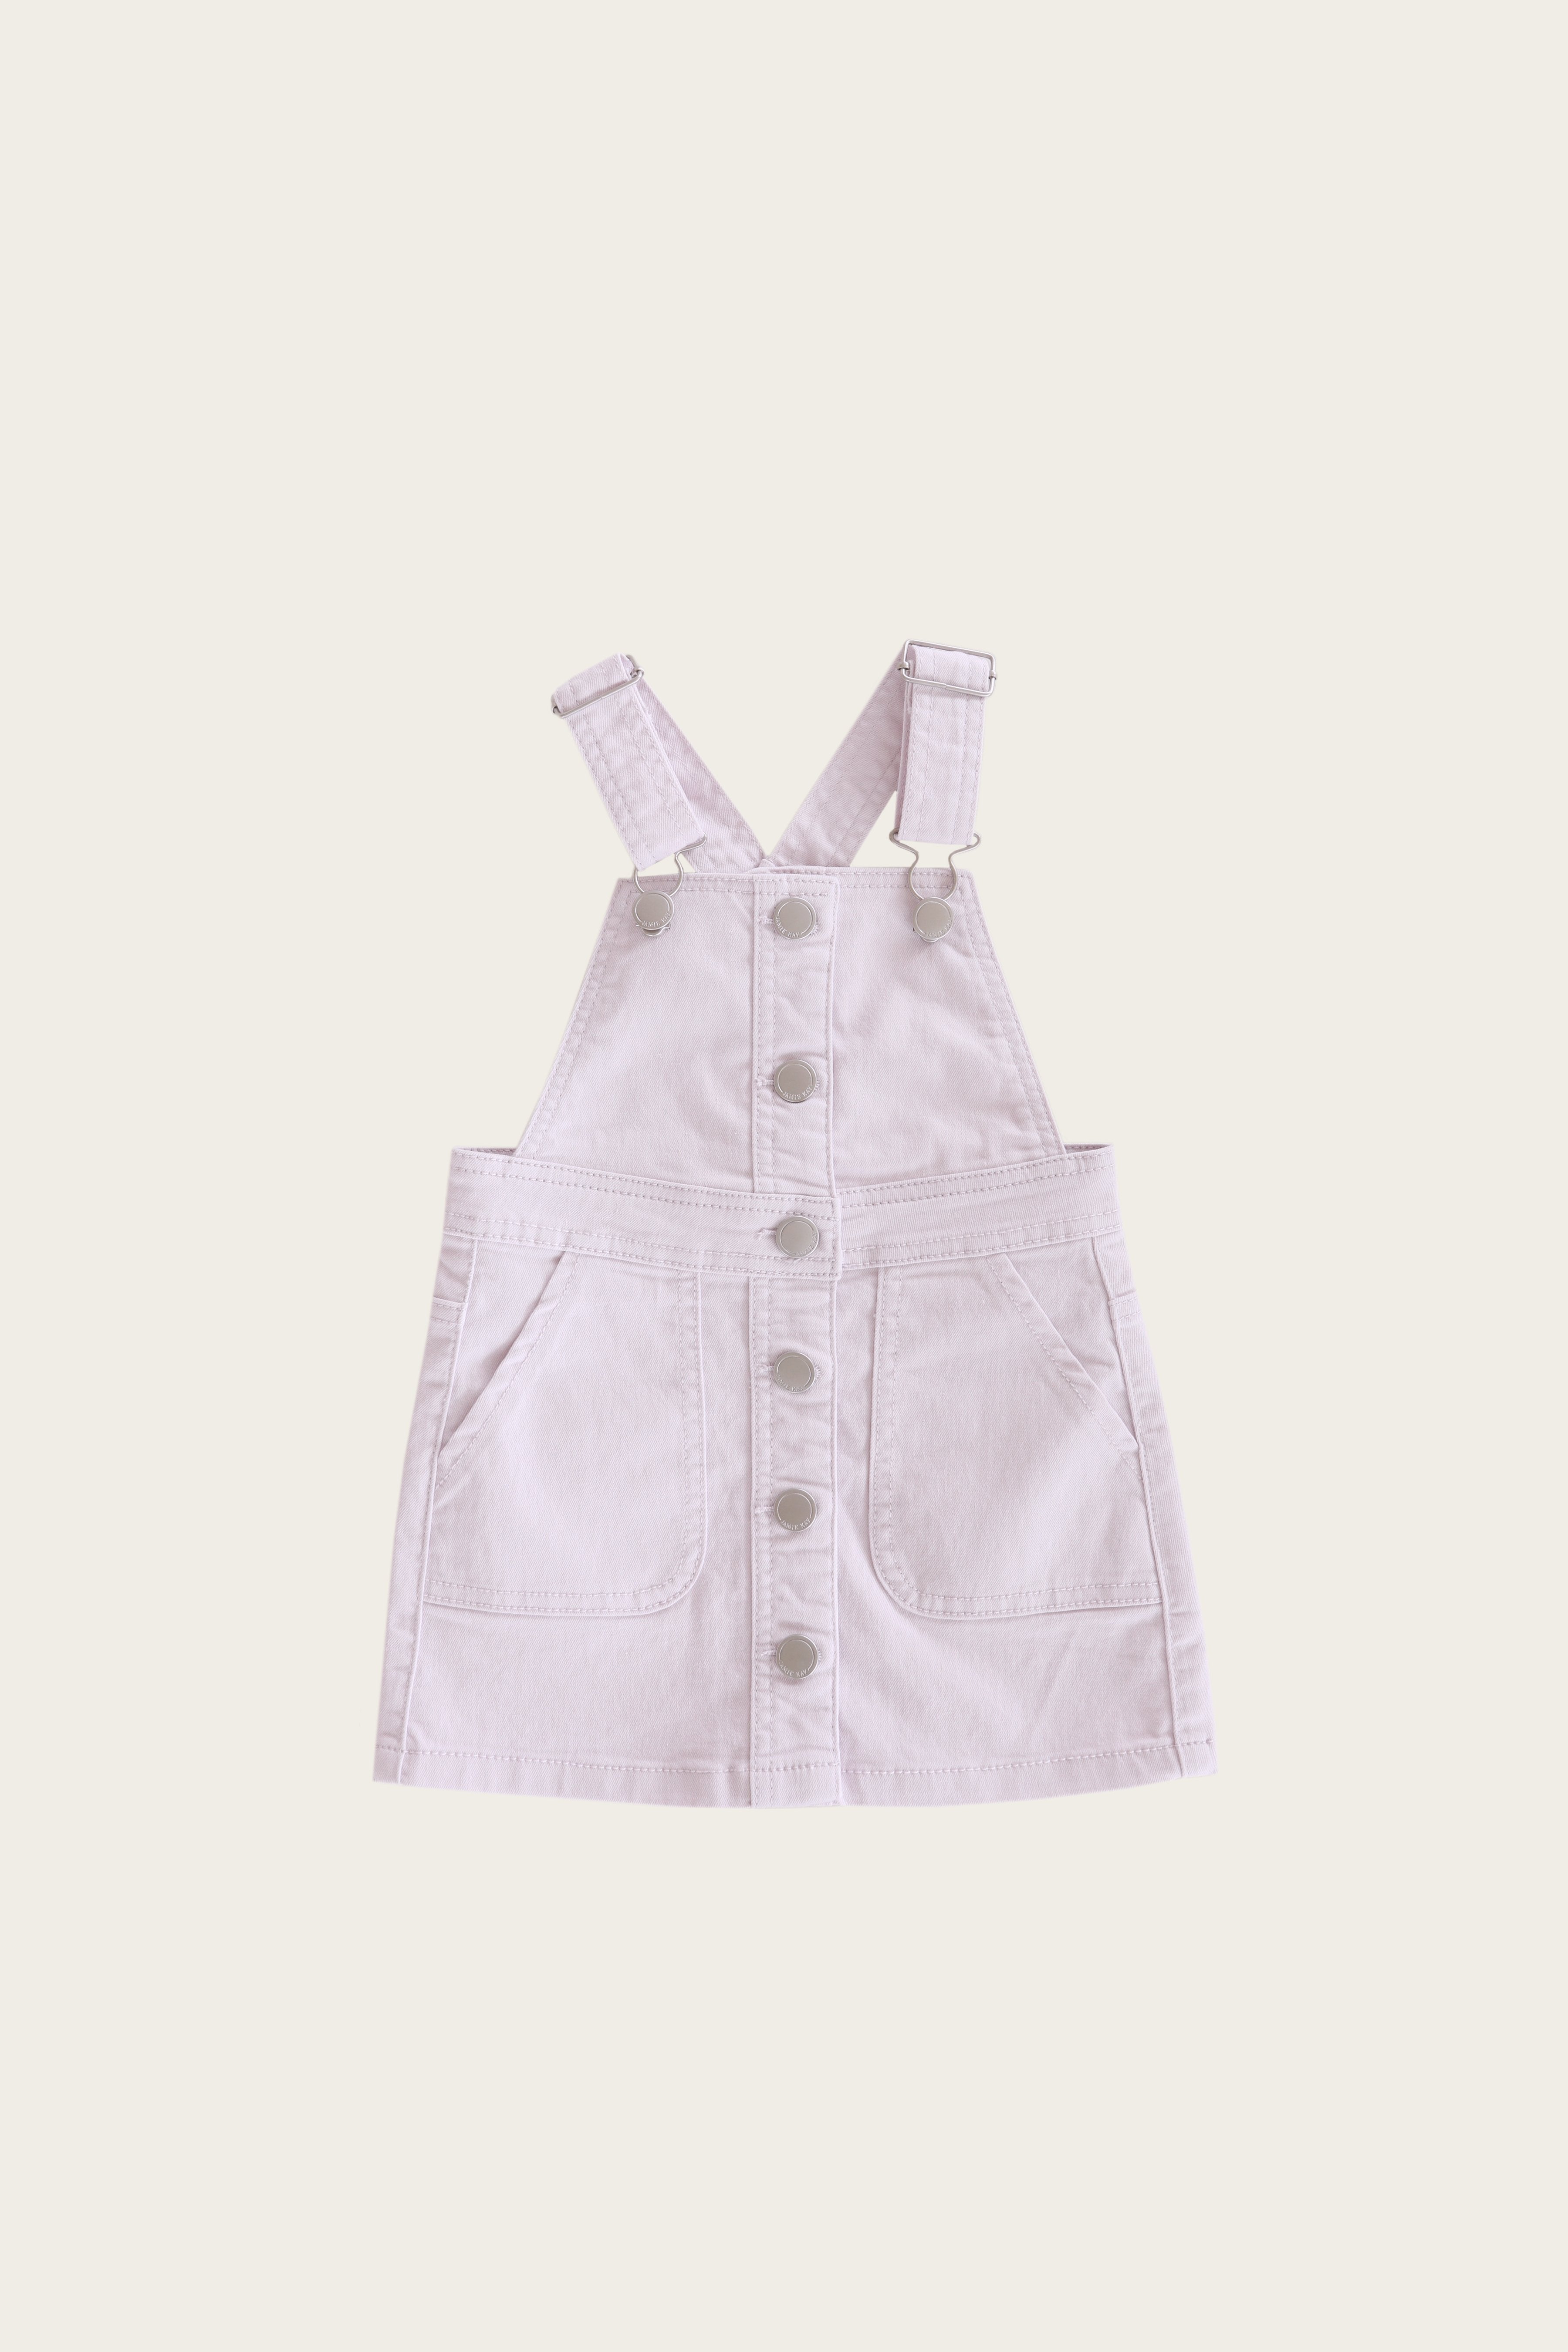 Lilac Dream Short-Sleeve Shirred Dress - Retro, Indie and Unique Fashion